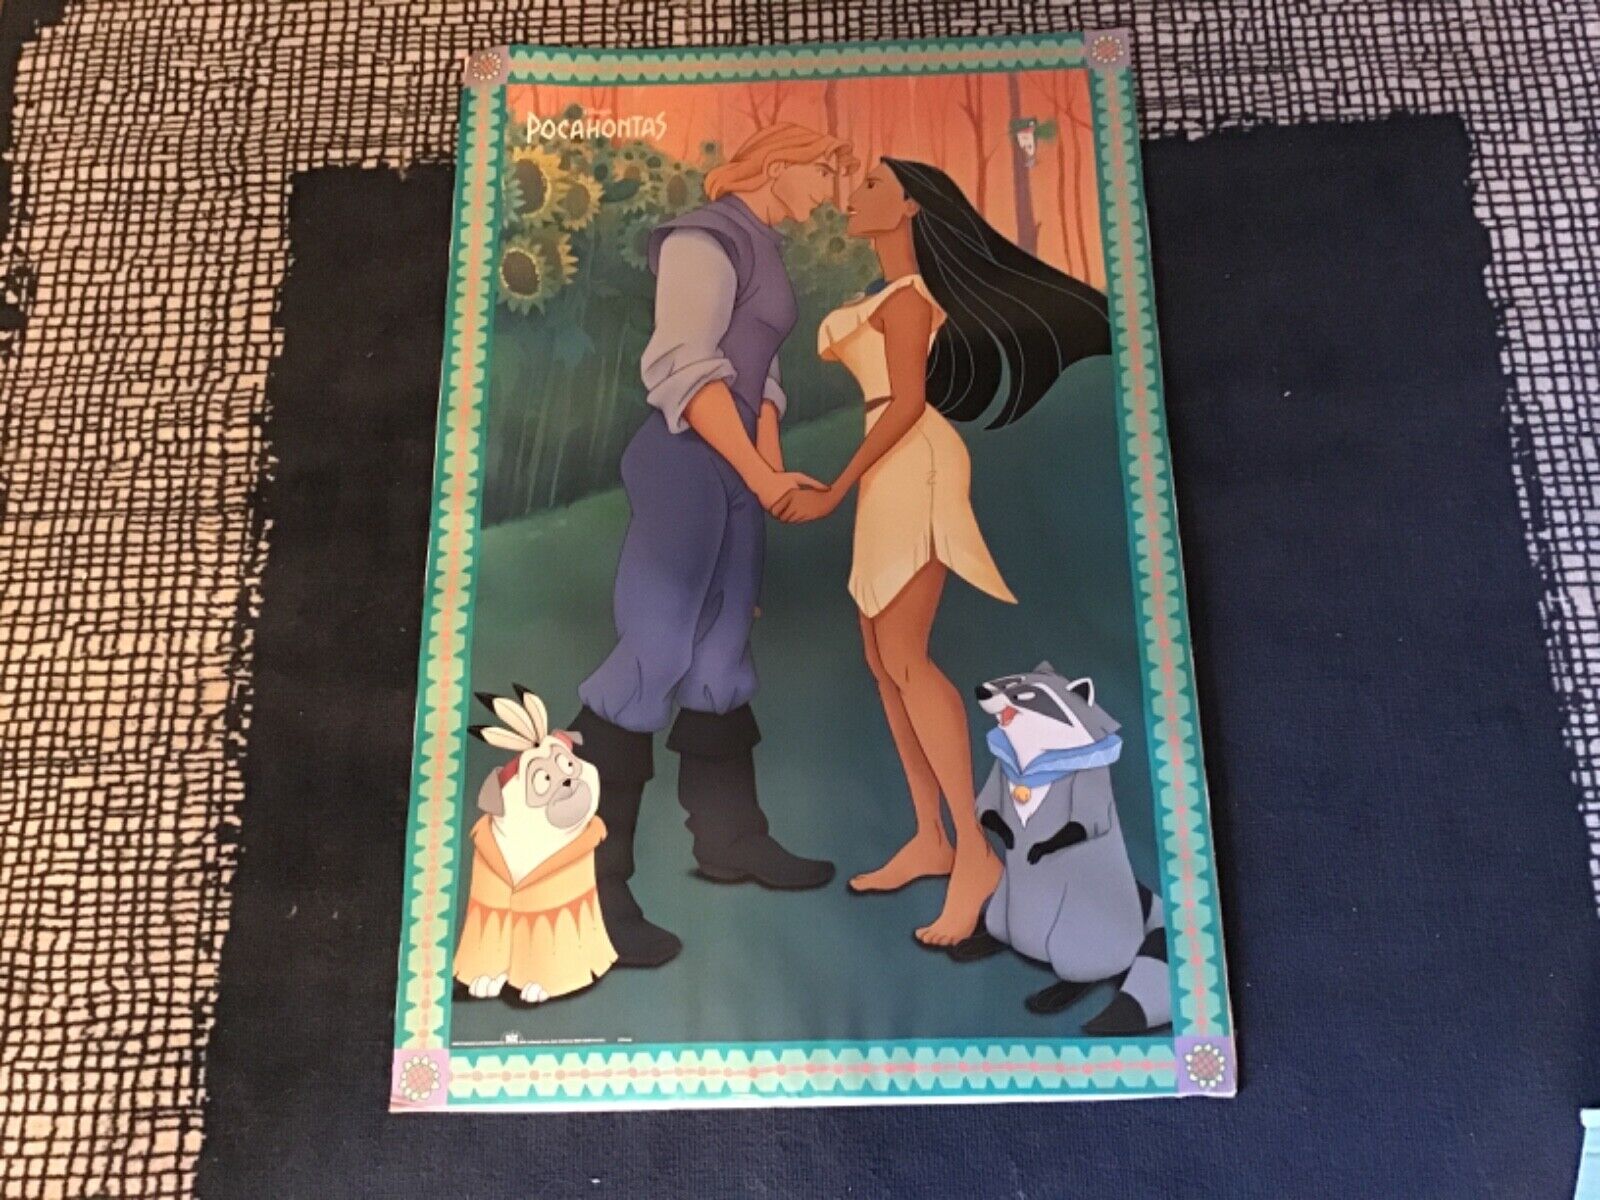 Walt Disney Pocahontas 1995 movie poster 23” x 35”